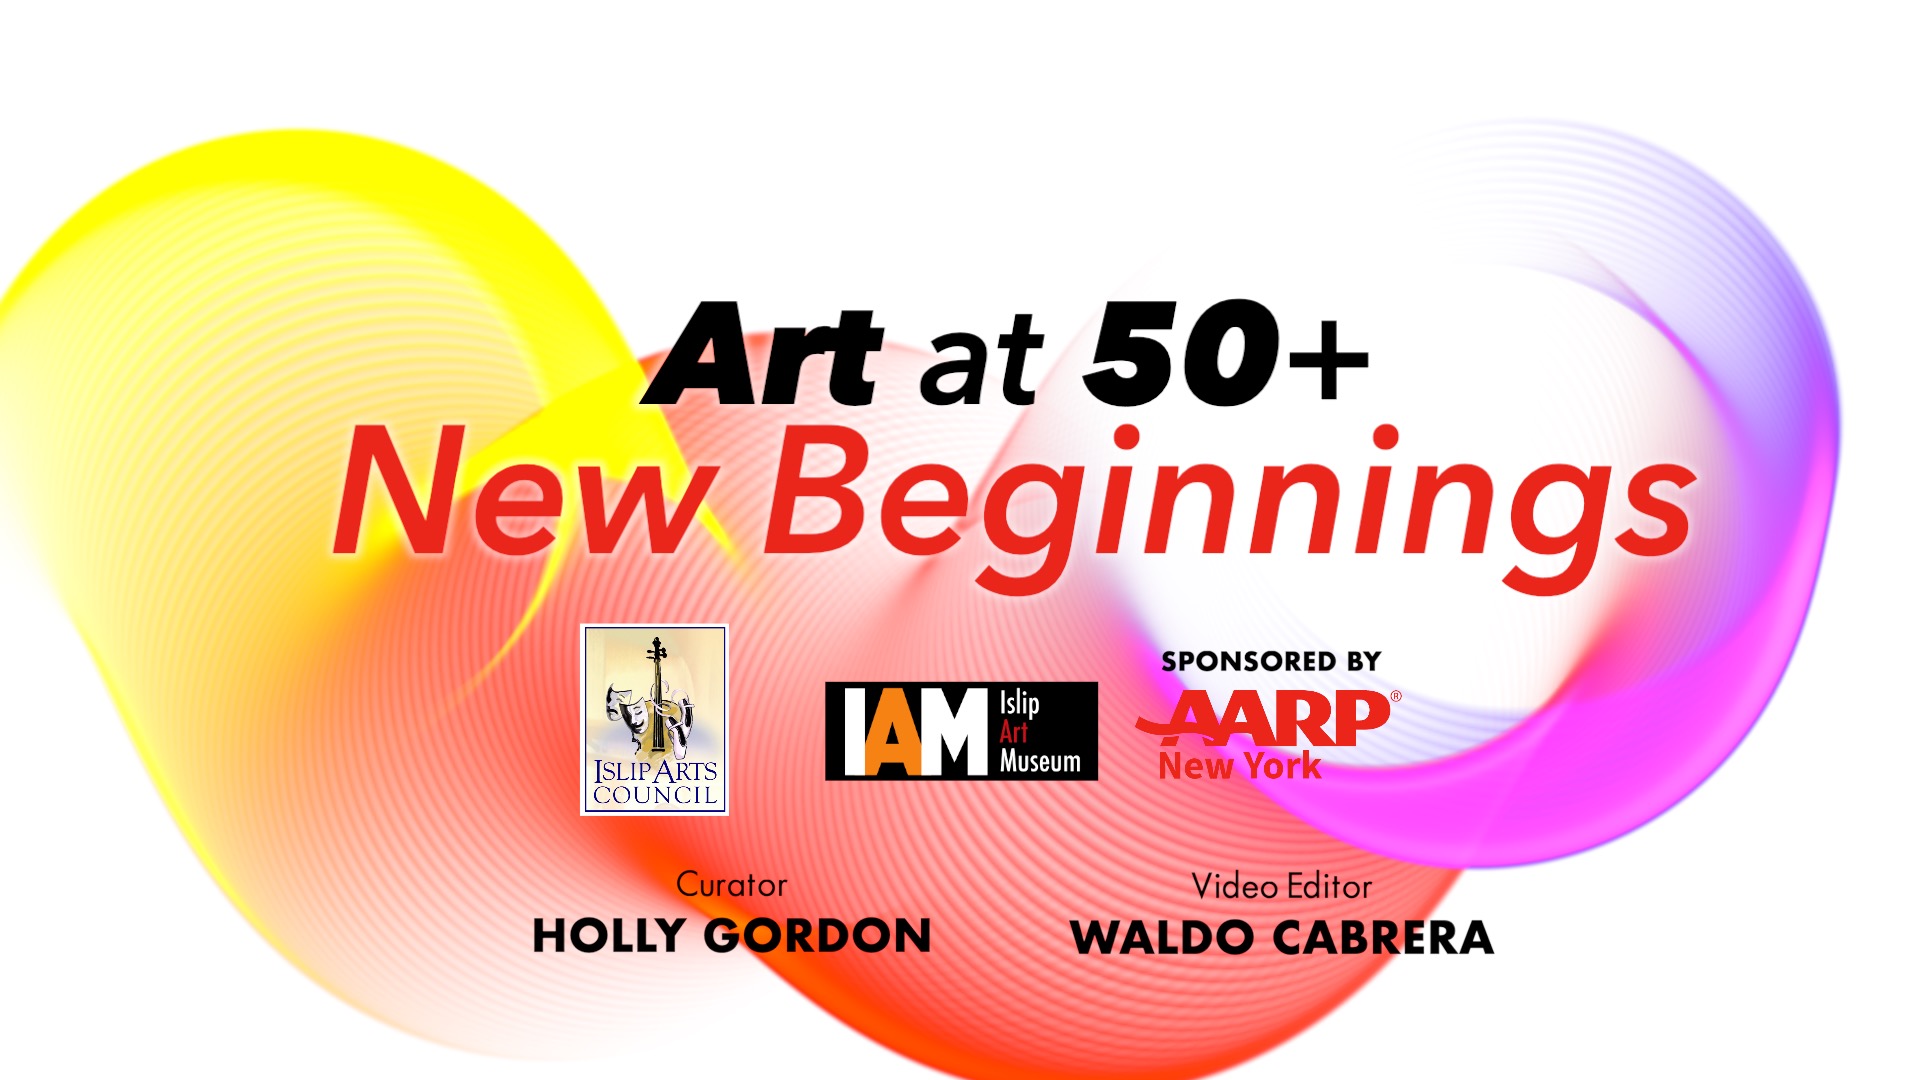 Art at 50 Plus: New Beginnings Virtual Art Exhibition at Islip Art Museum